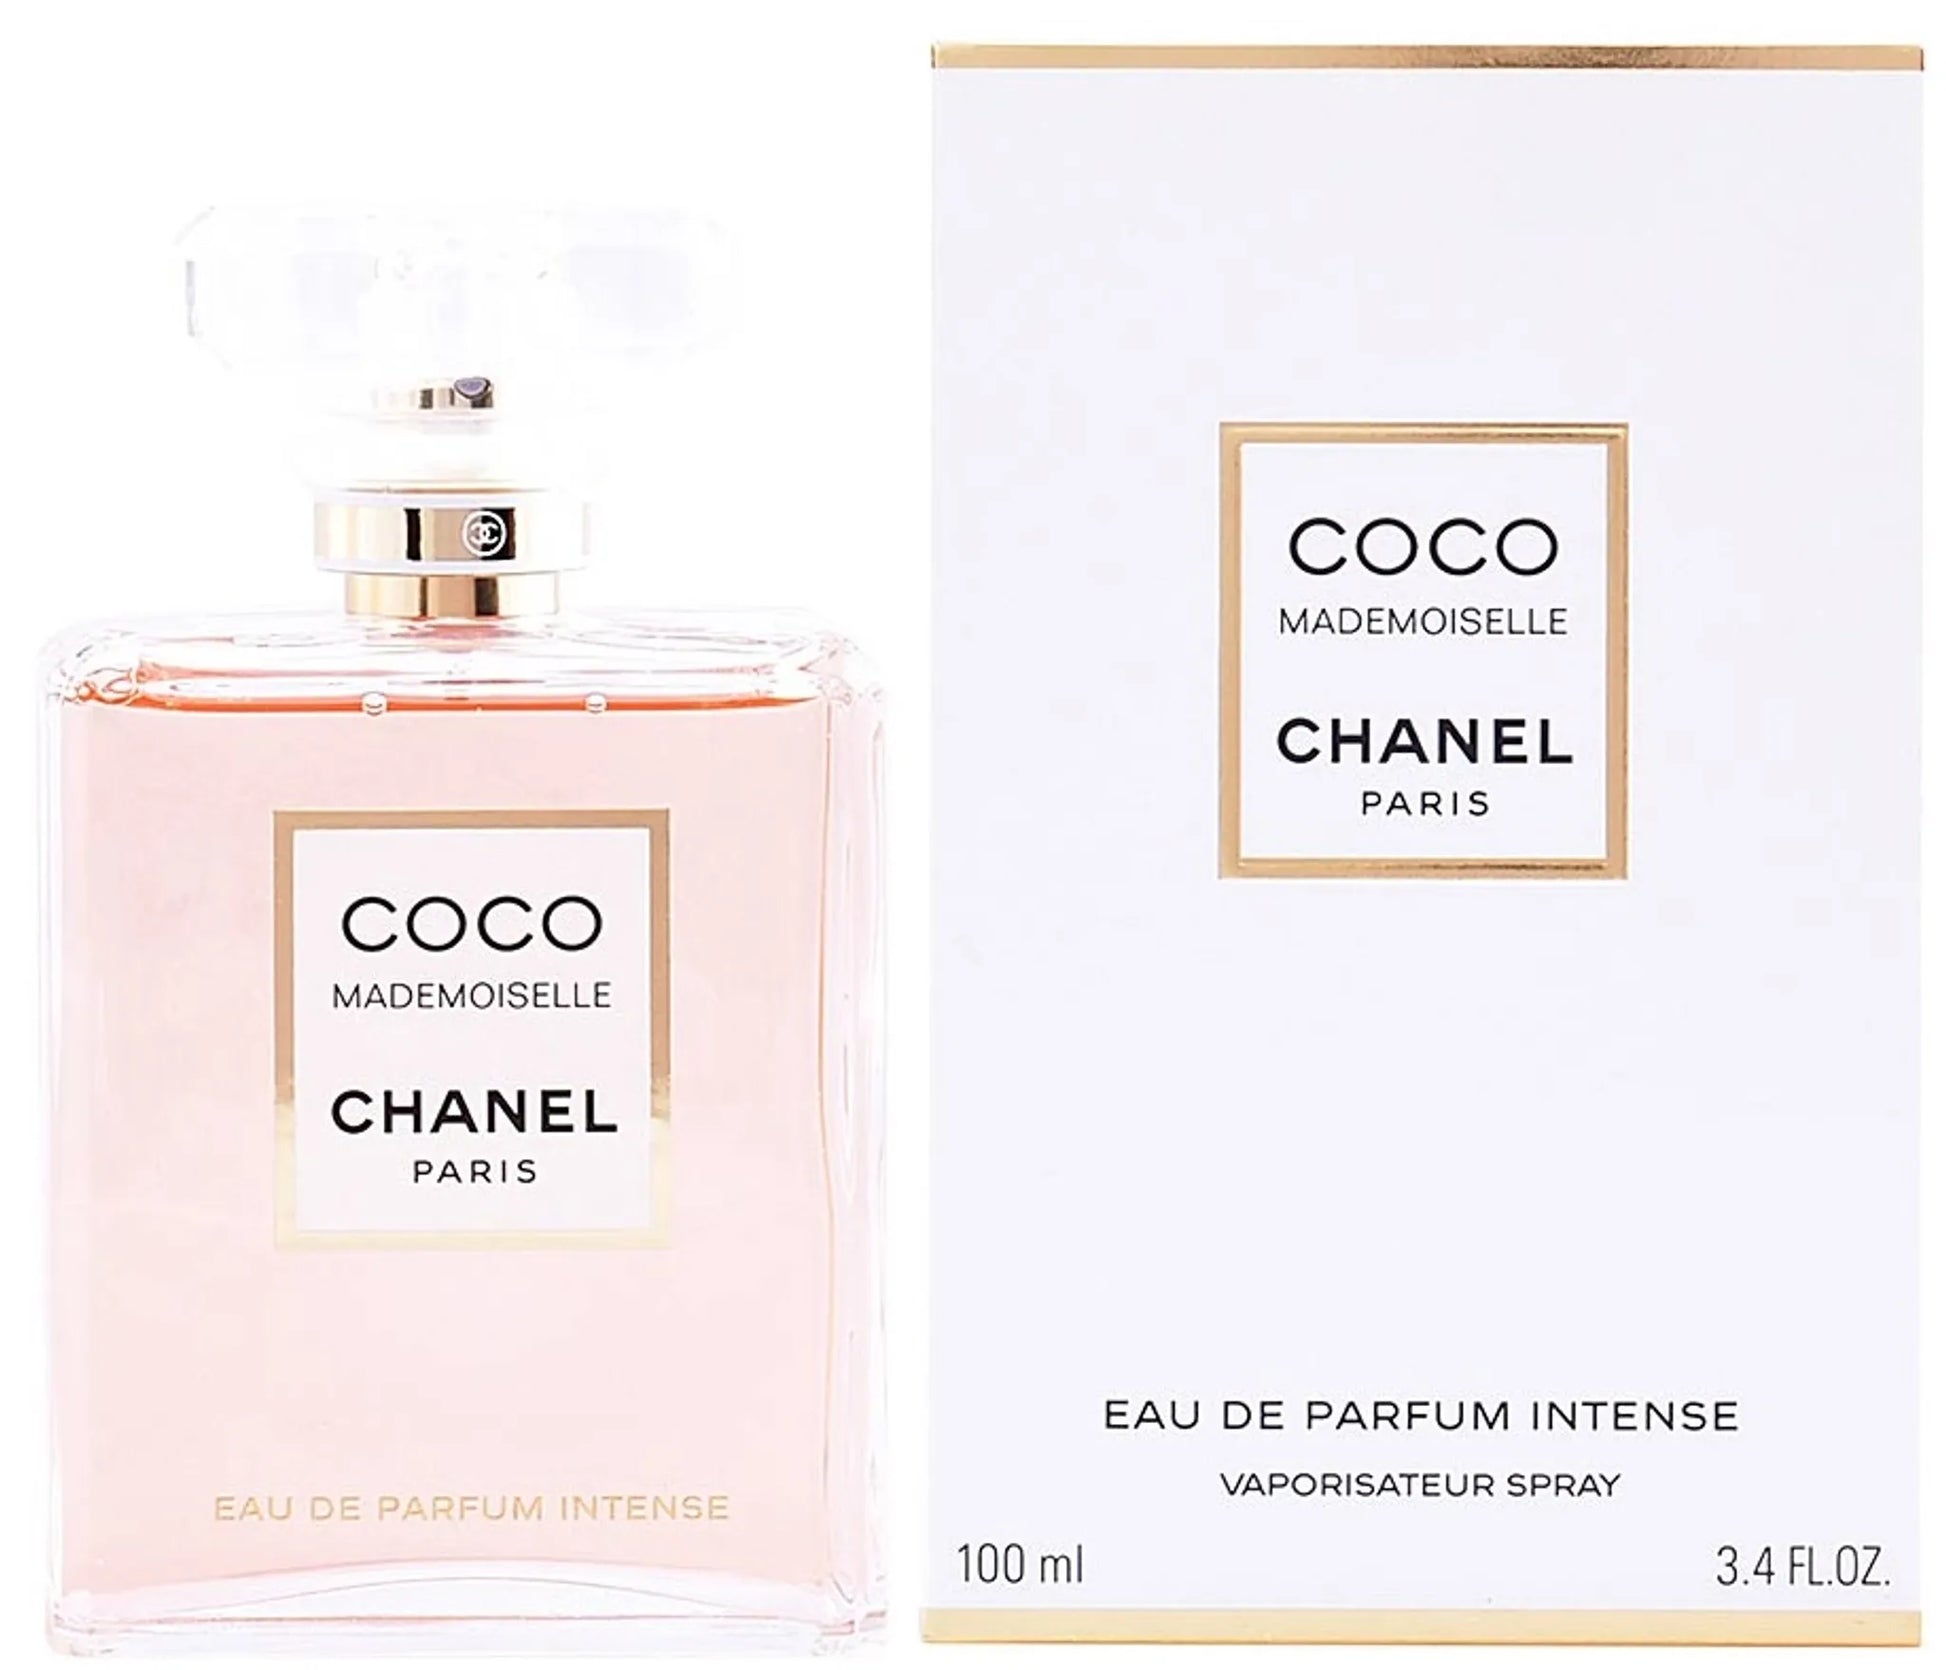 COCO MADEMOISELLE CHANEL Paris 100 ml perfume Unboxing 